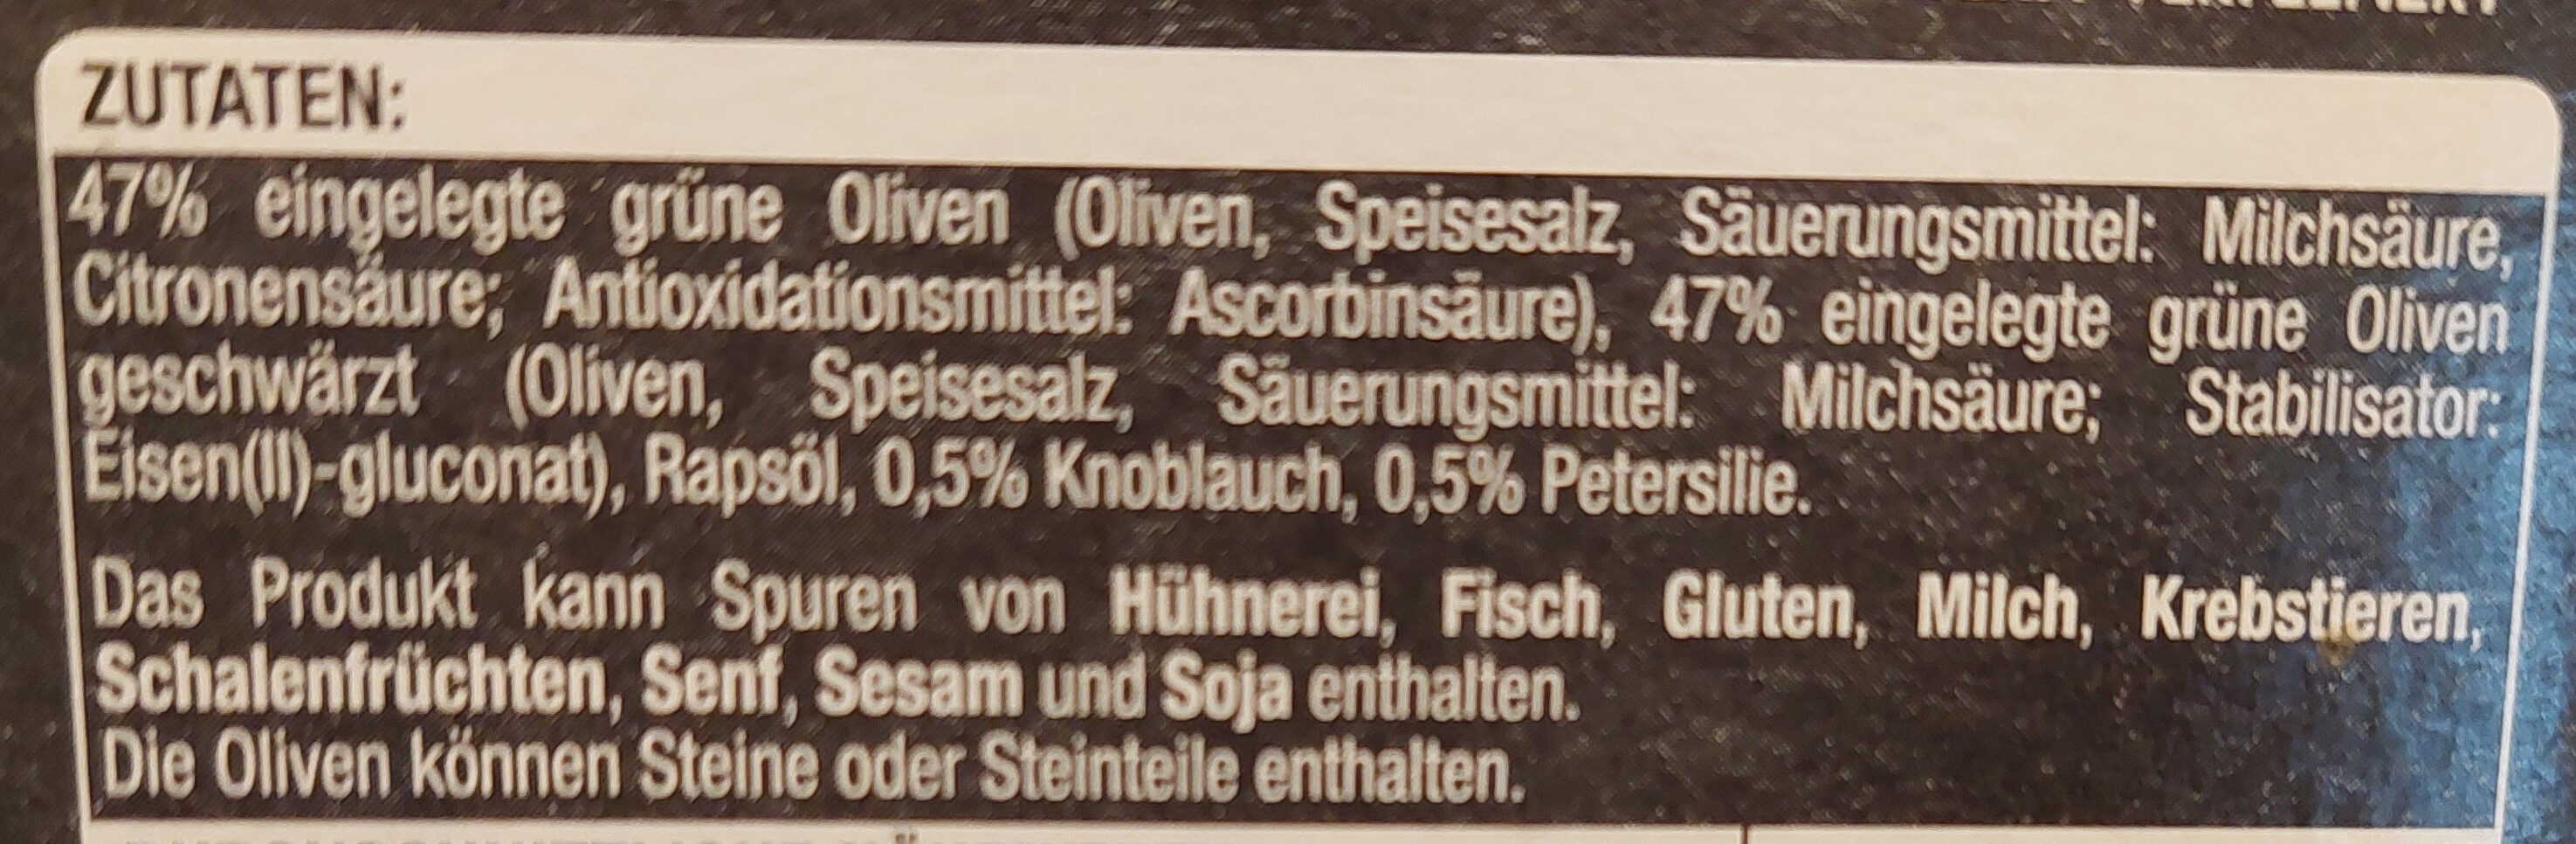 Olivenmix - Ingredienser - de